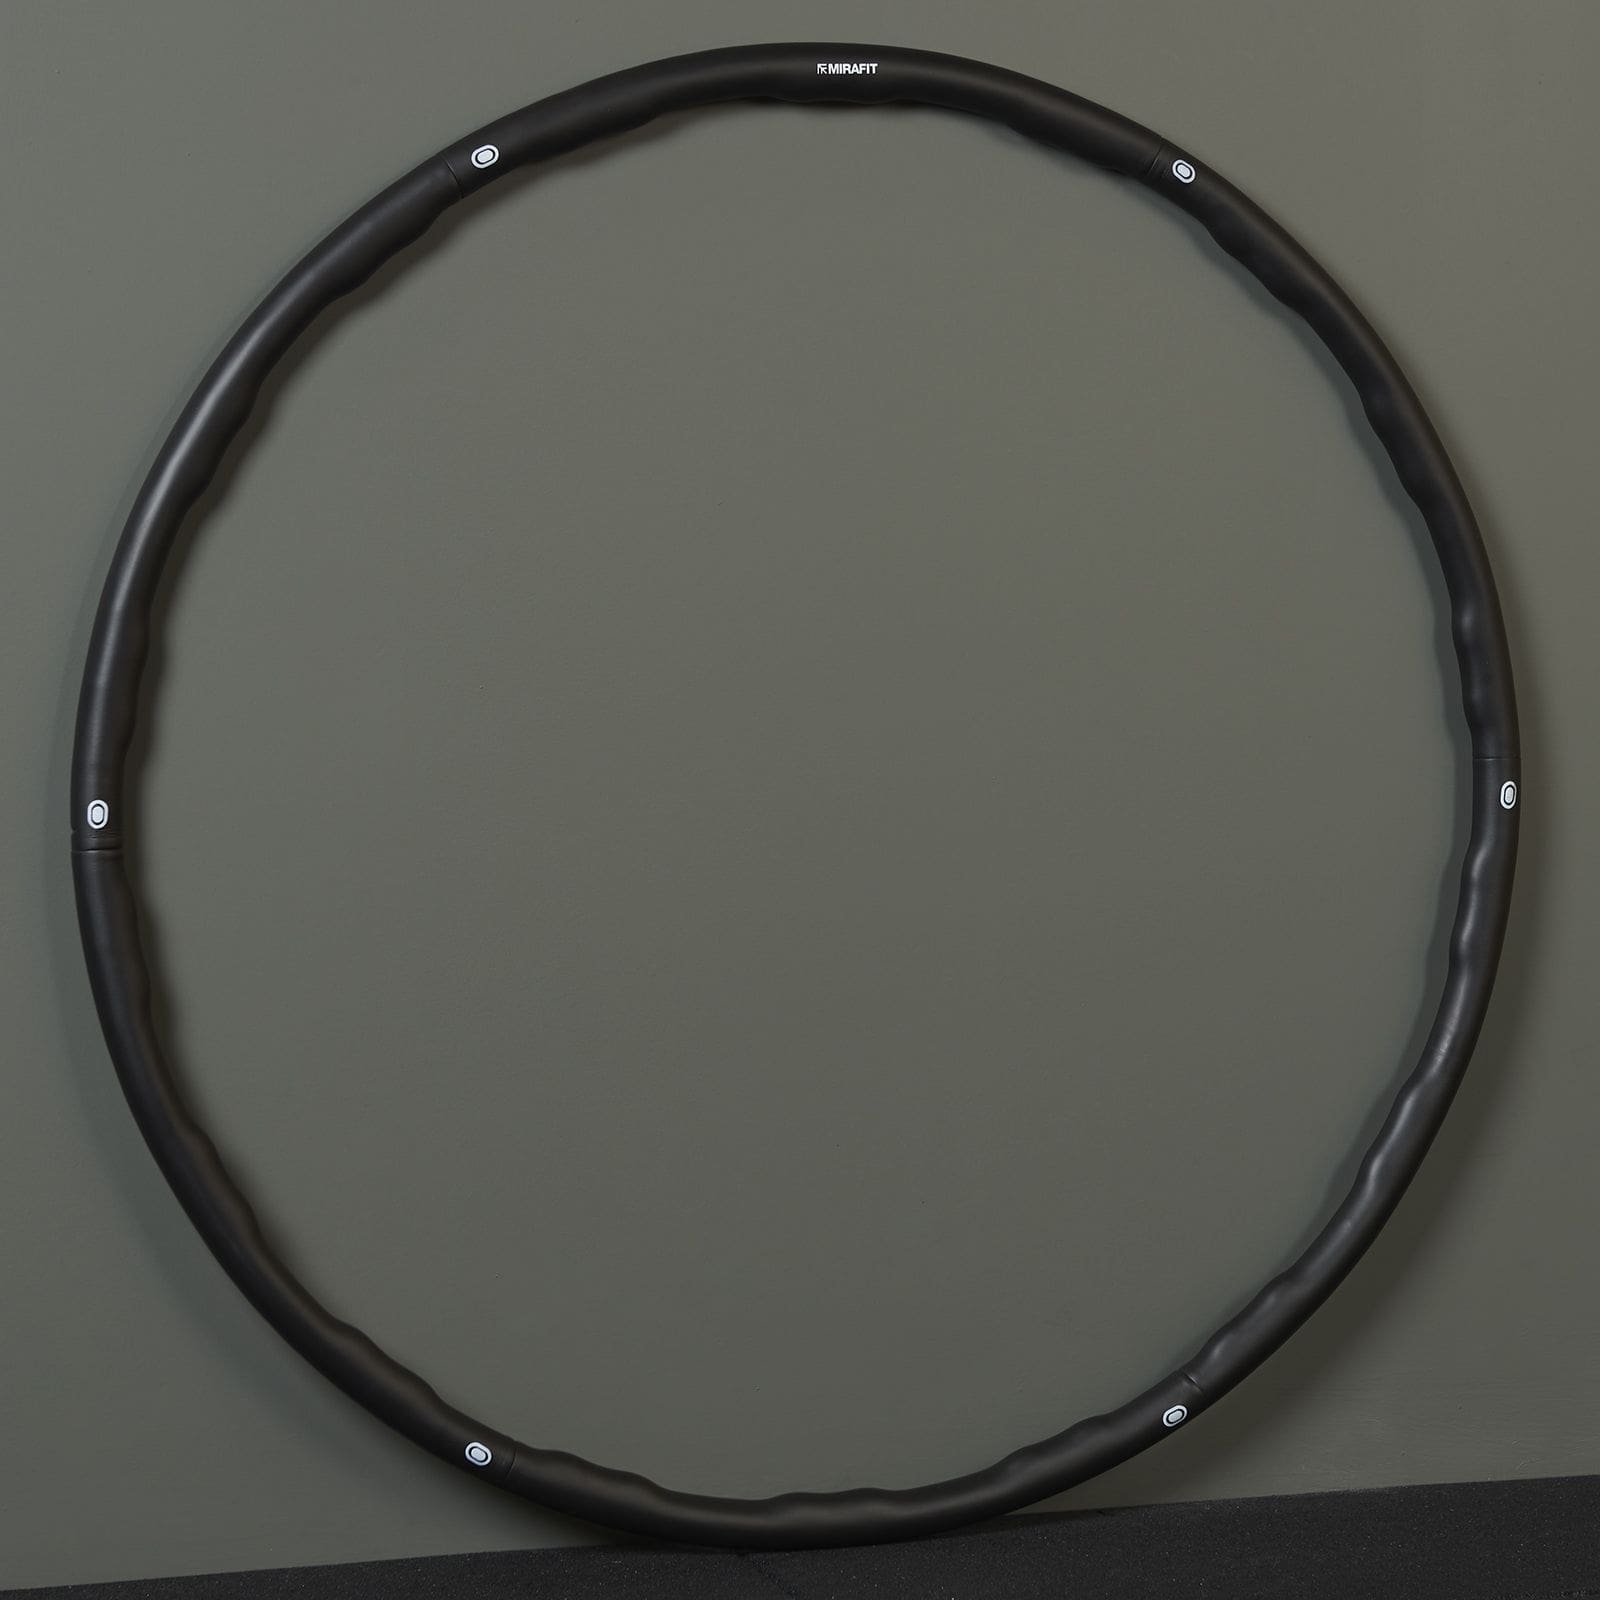 mirafit 1.2kg ridged weighted fitness hula hoop Black Version